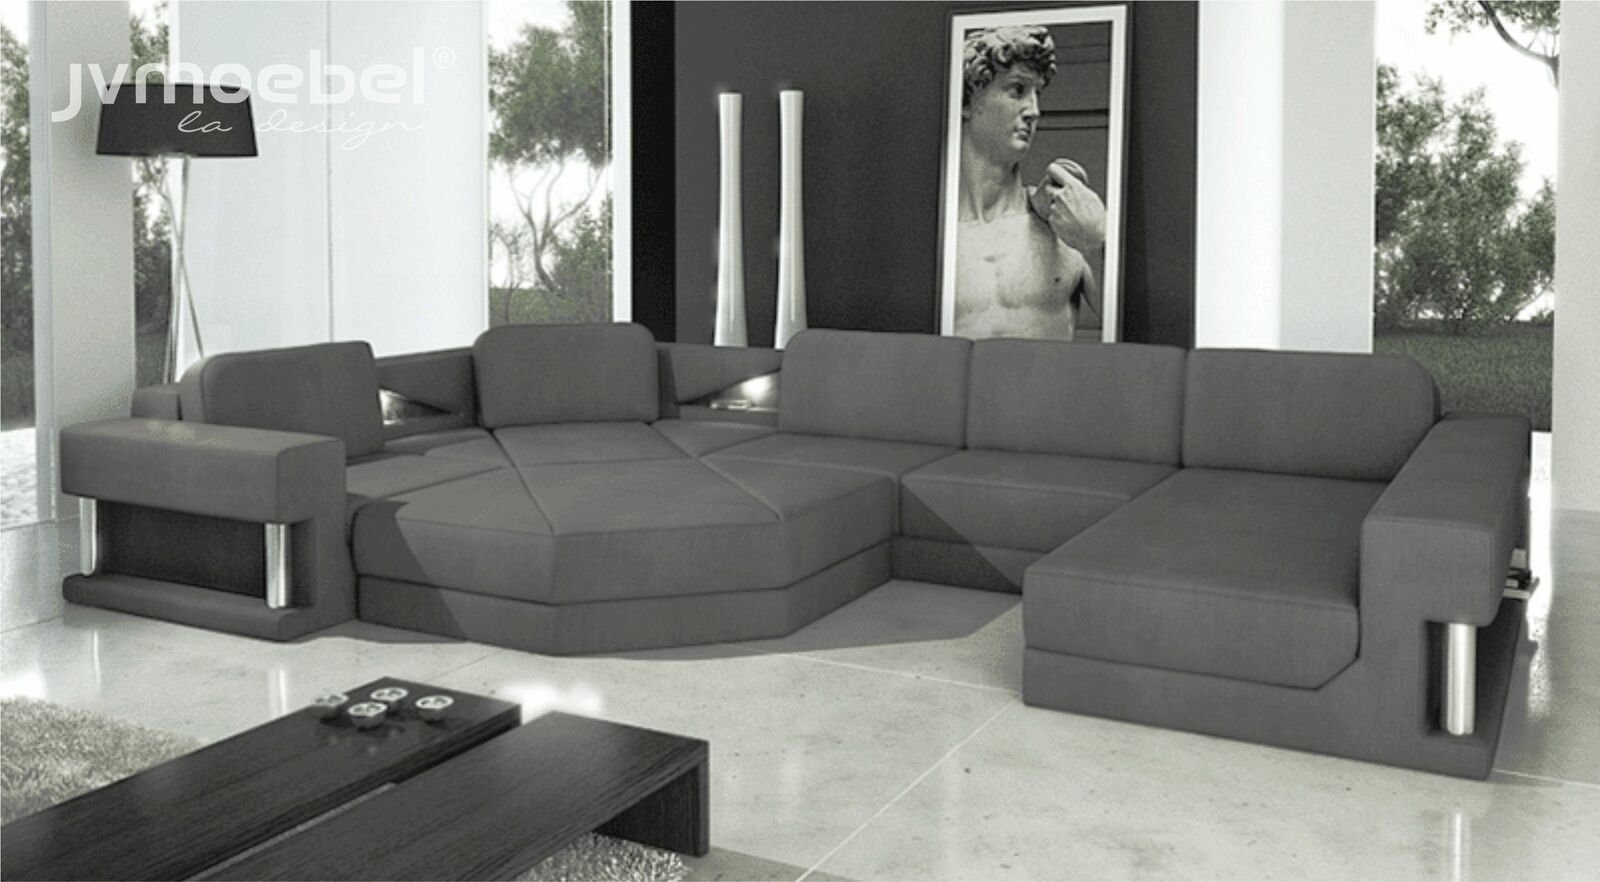 Schlaf Modern U-Form JVmoebel Polster Bettfunktion Textil Ecksofa Design Ecksofa, Couch